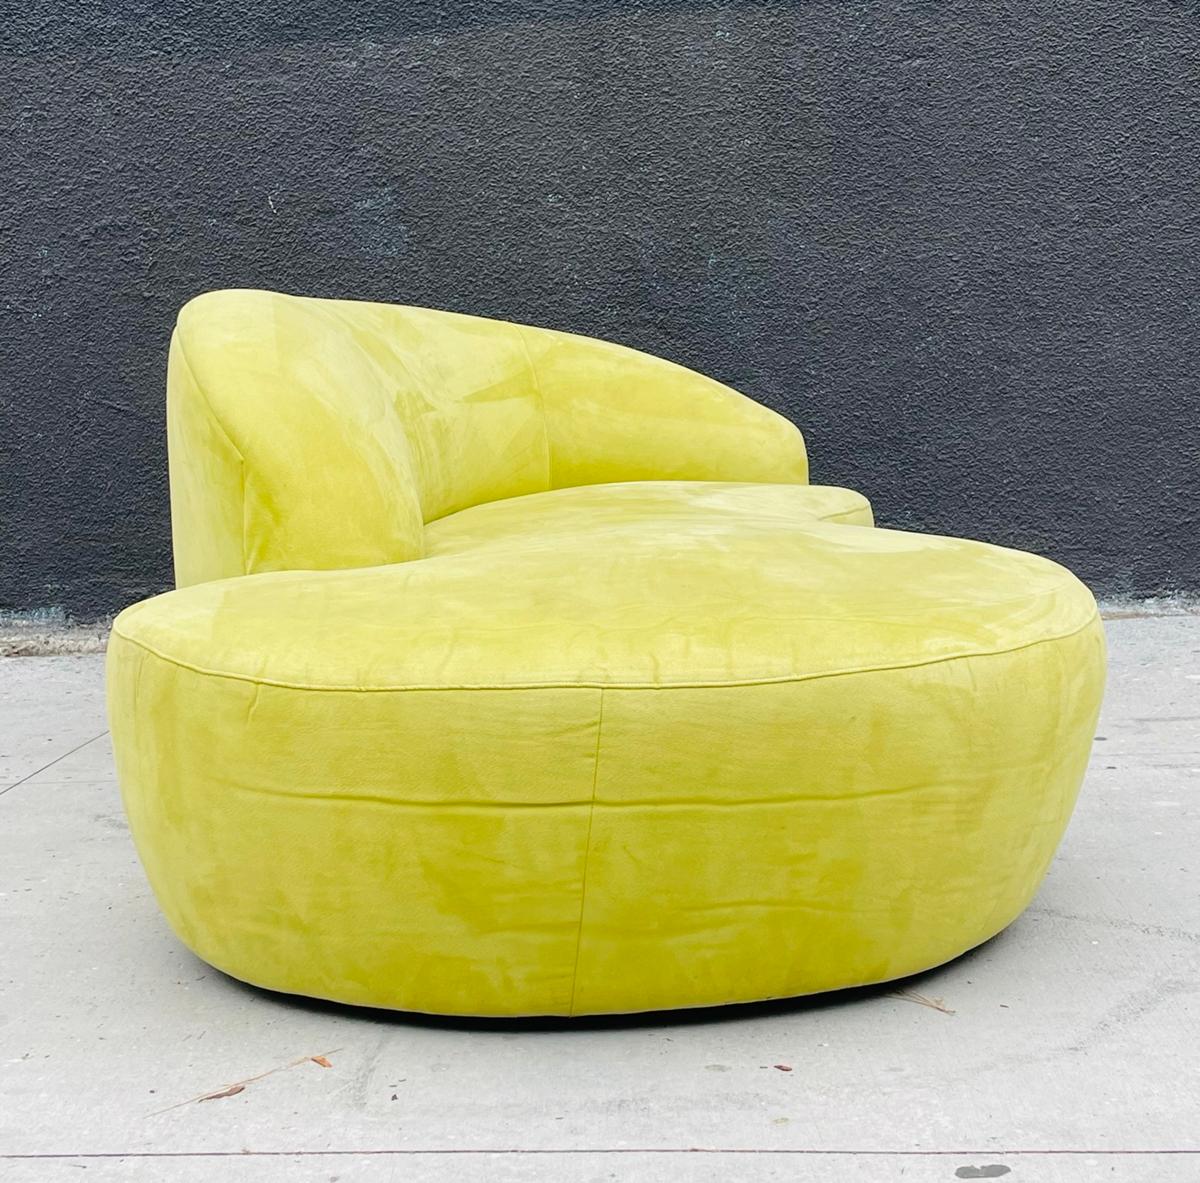 American Serpentine Sofa in the Style of Vladimir Kagan